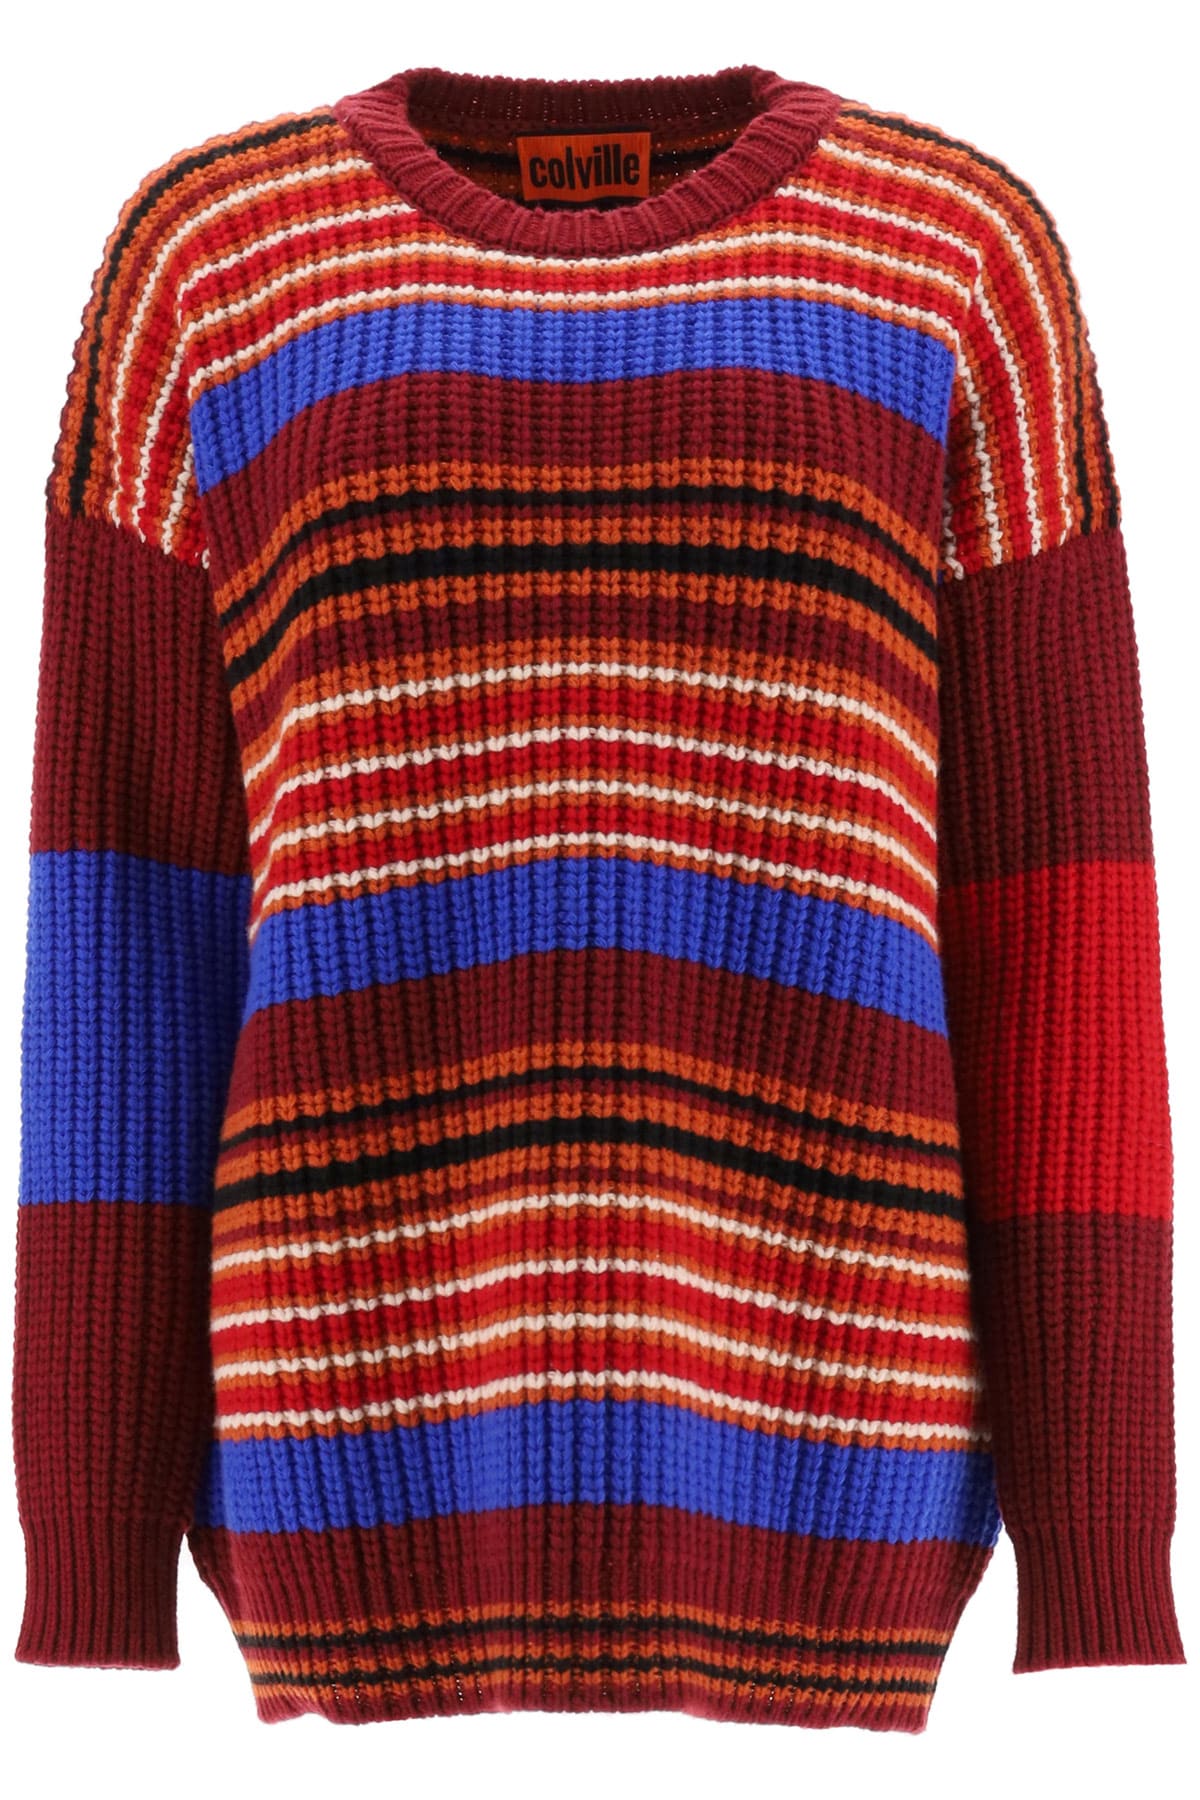 Colville Striped Sweater